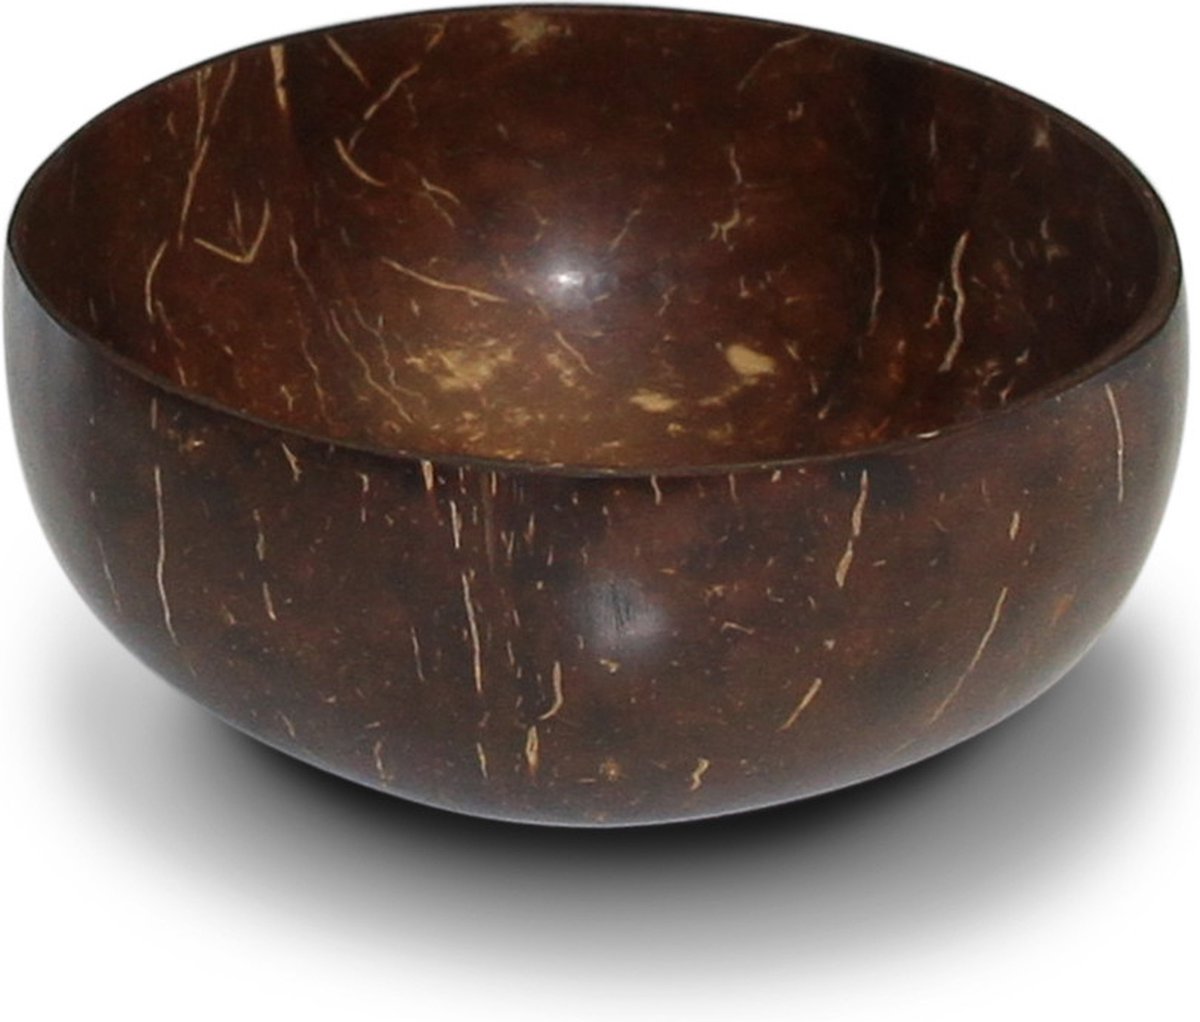 Noya - Coconut Bowl - Kokosnoot - Schaal Kom - Bruin Natural Colour / Glossy Design